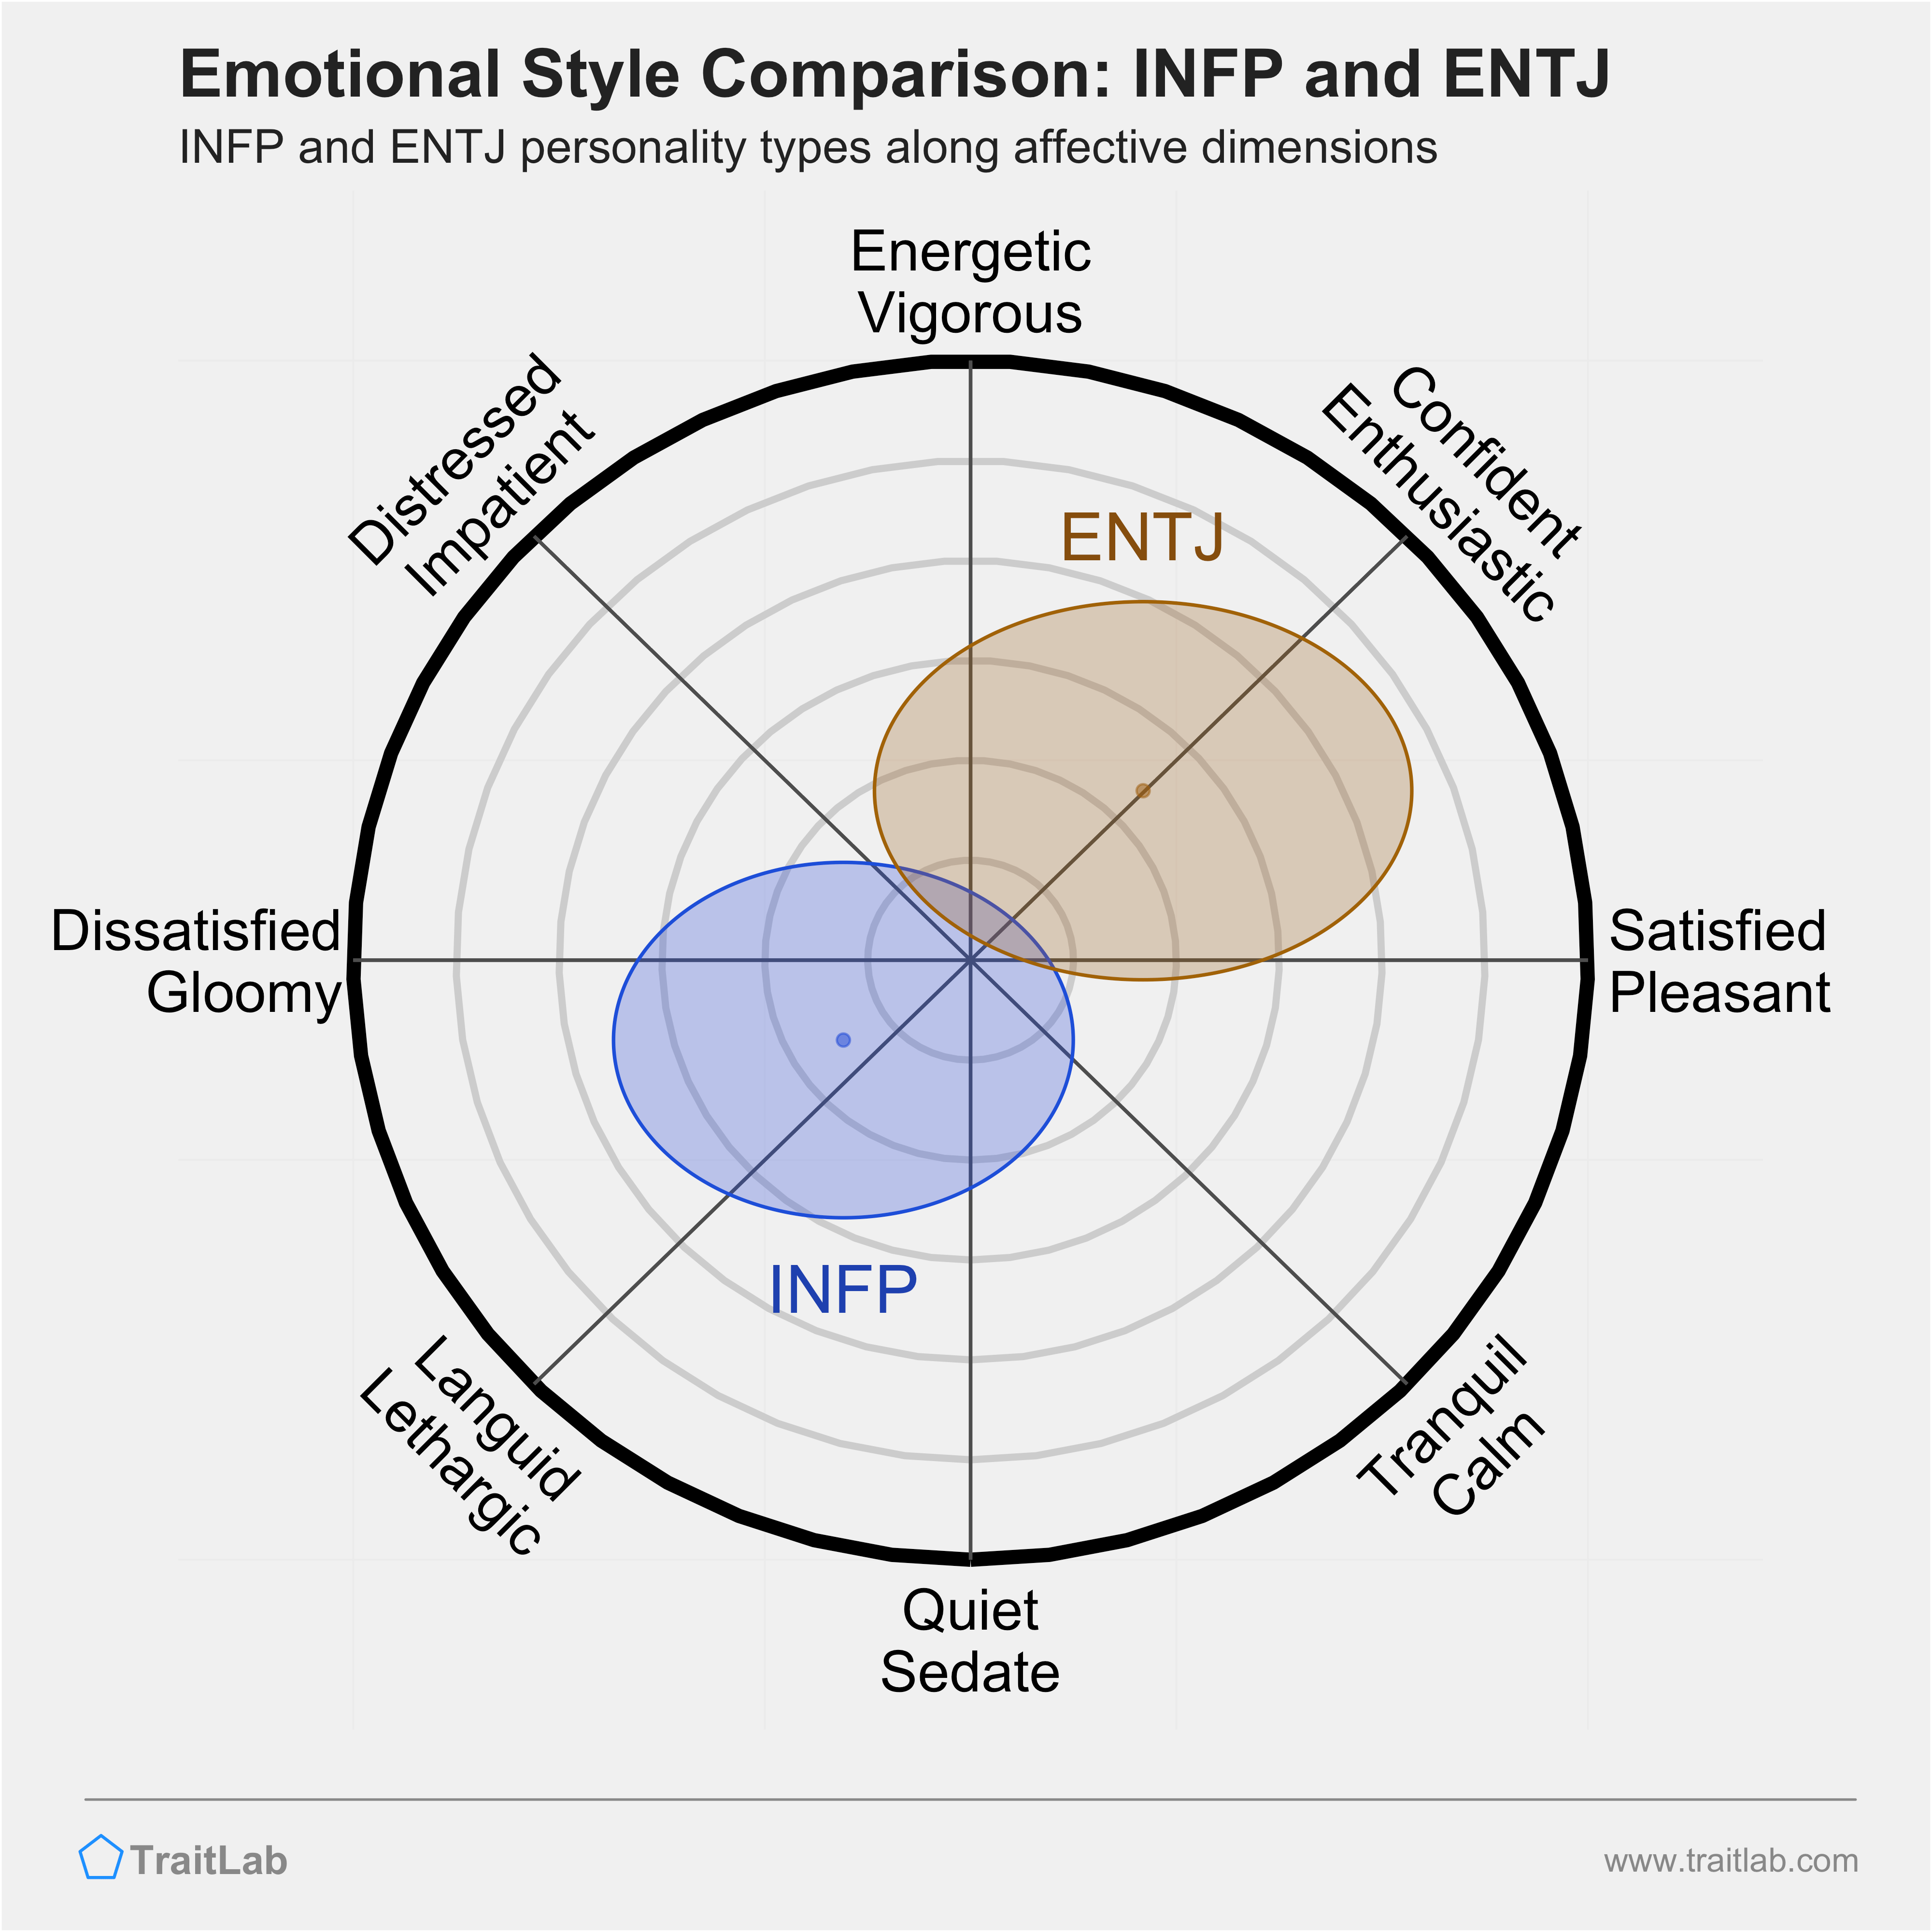 INFP and ENTJ comparison across emotional (affective) dimensions